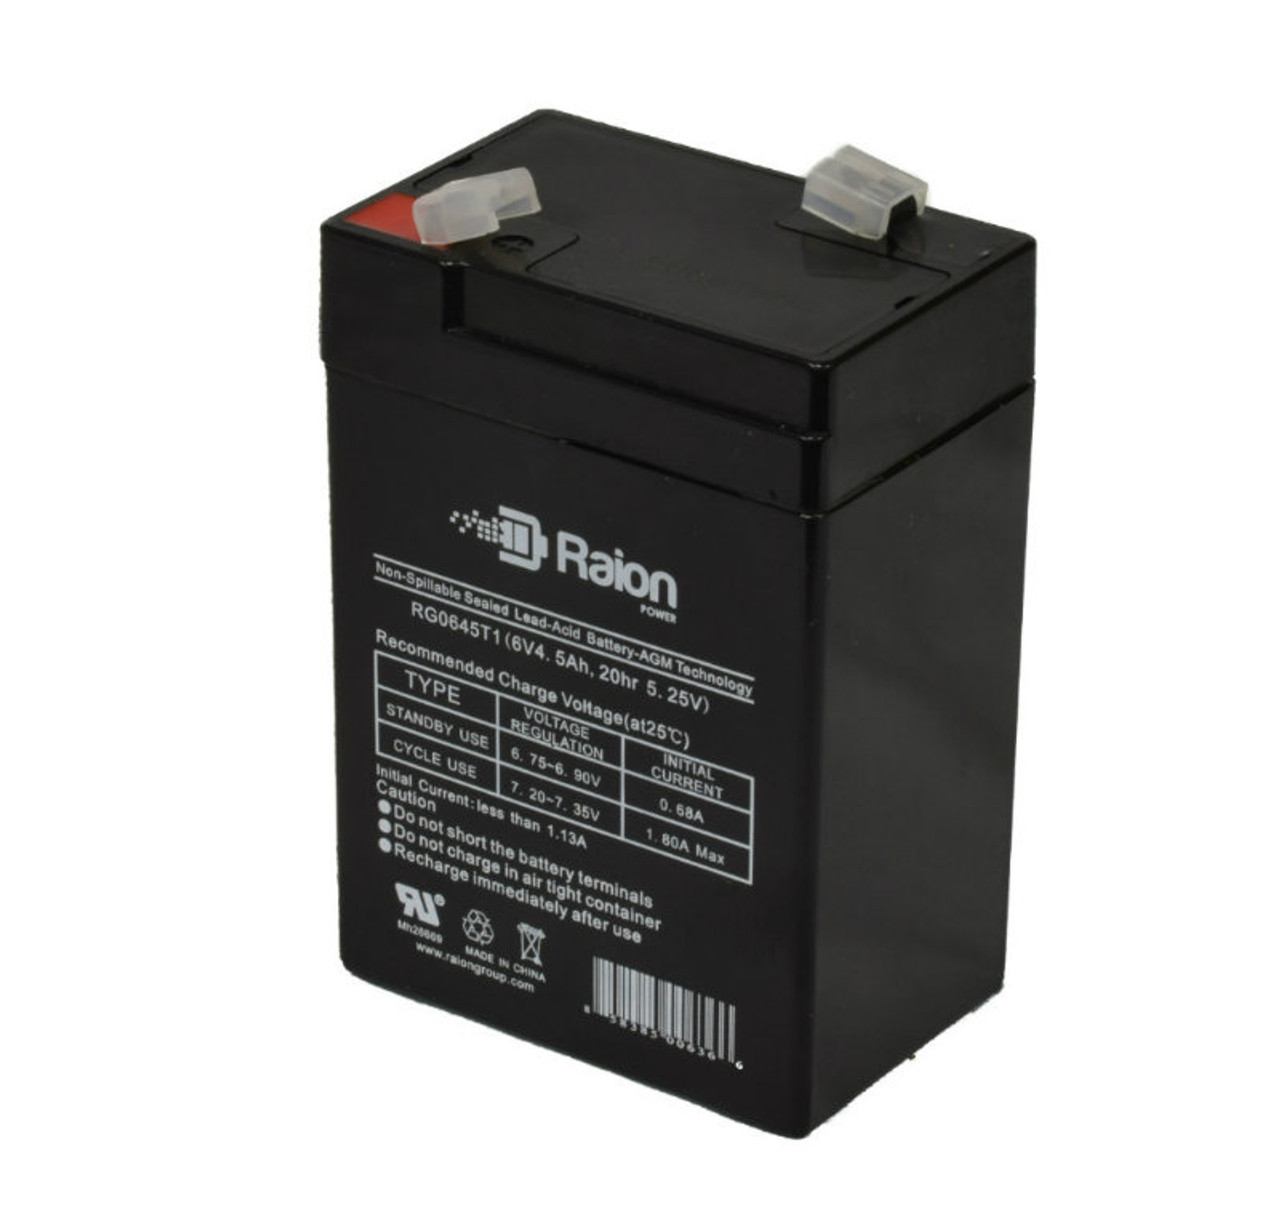 Raion Power RG0645T1 6V 4.5Ah Replacement Battery Cartridge for Wonderlanes 2860 Lil ATV Quad